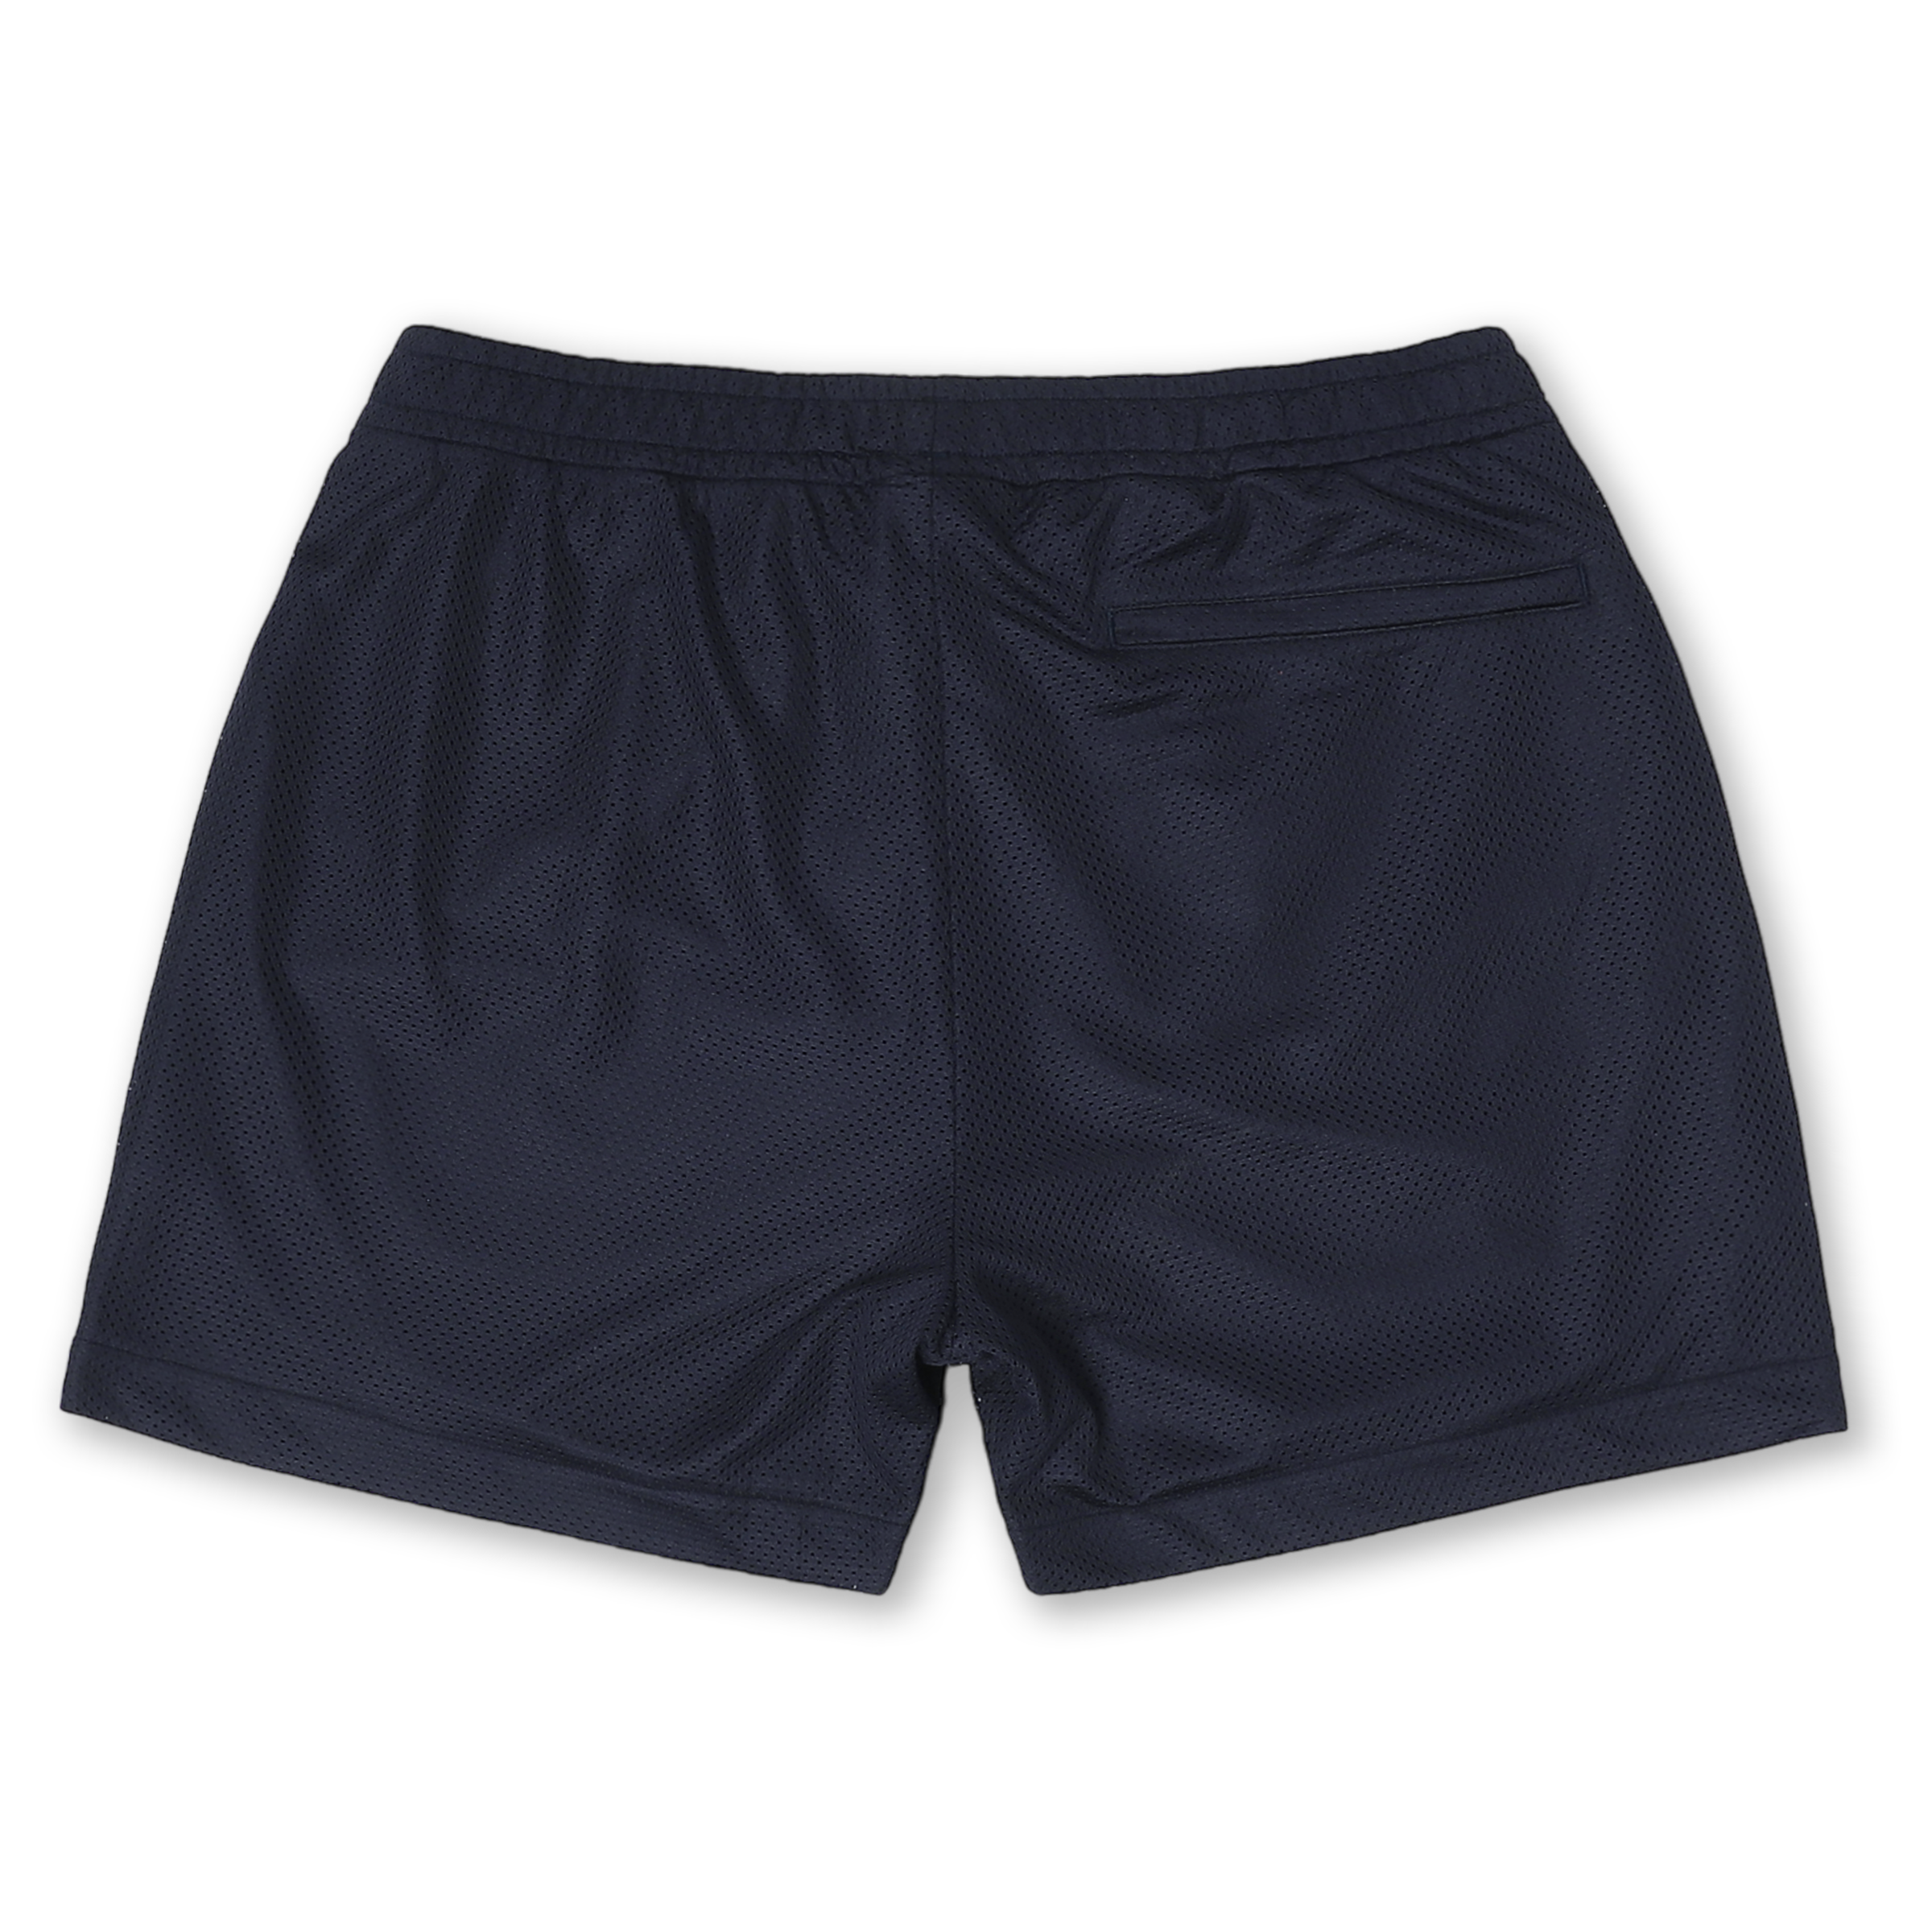 Mesh Short 5.5" Navy back with elastic waistband and back right hidden zipper pocket